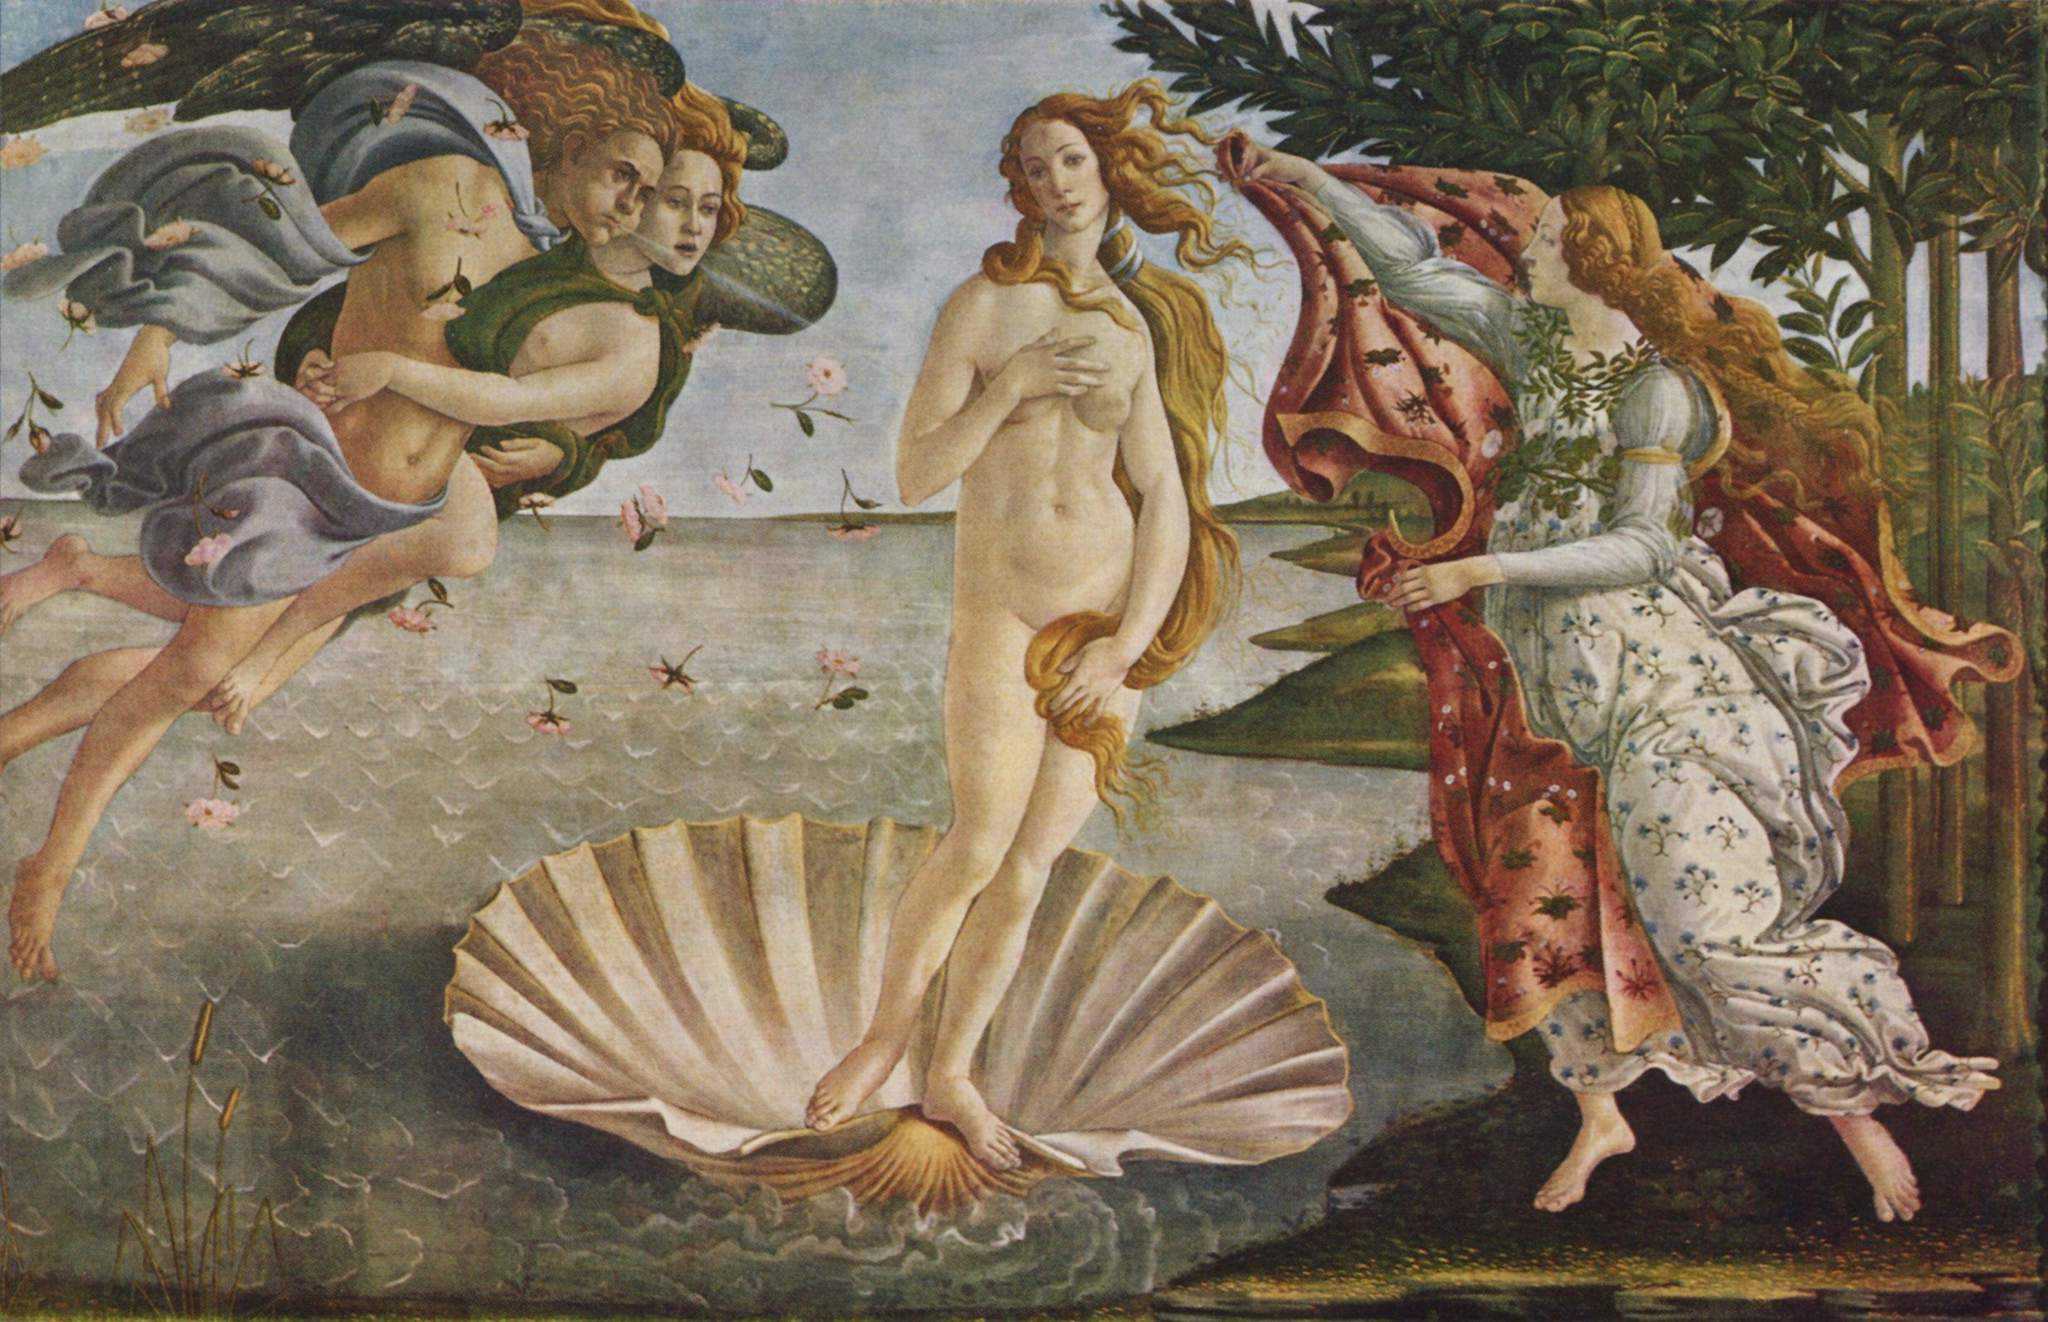 Sandro Botticelli, Exhibition, Musée Jacquemart-André: 10 September 2021-24 January 2022